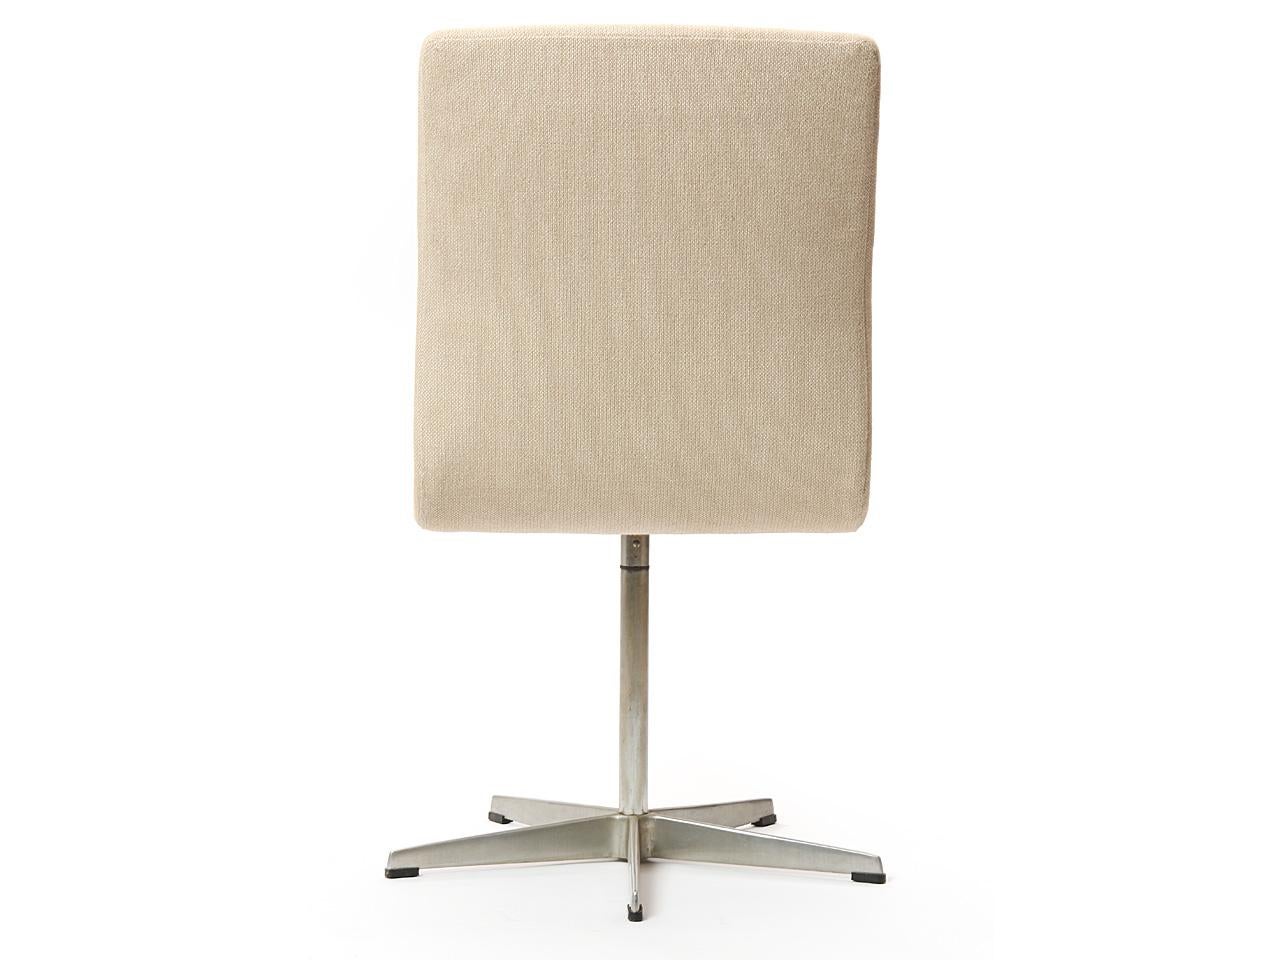 Danish 1965 'Oxford' Chair by Arne Jacobsen for Fritz Hansen in Original Beige Wool  For Sale